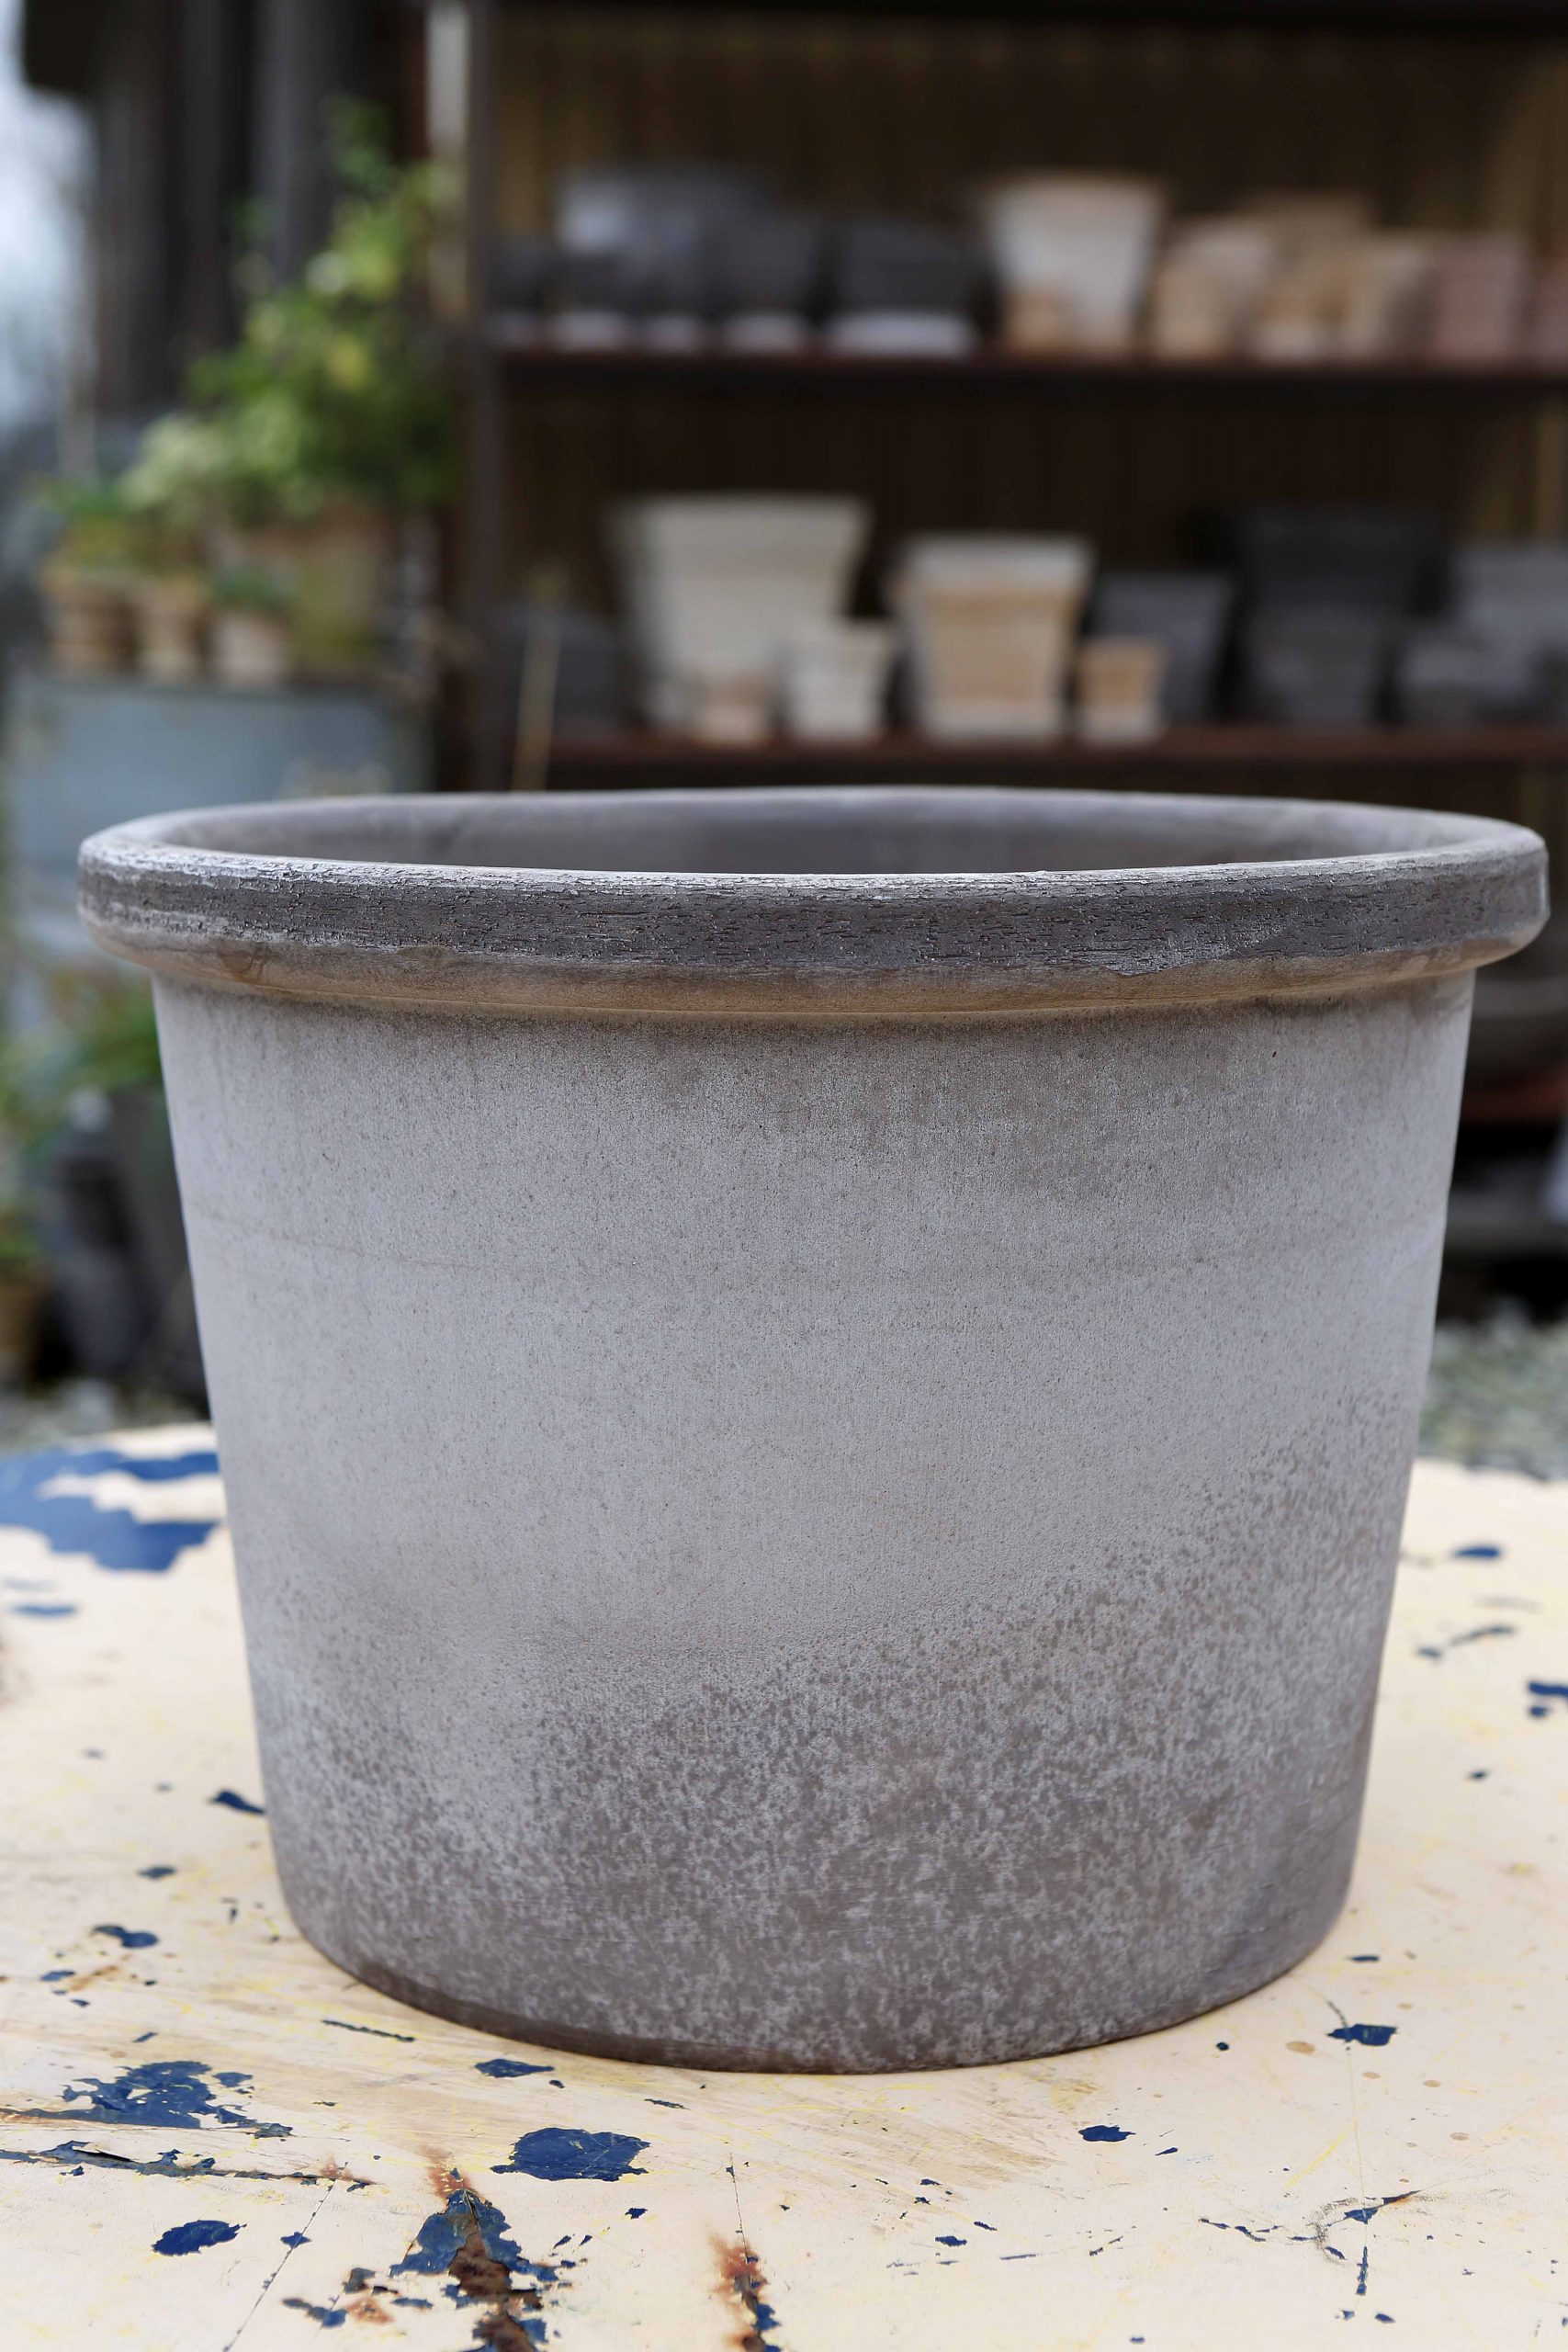 A raw empty grey pot.